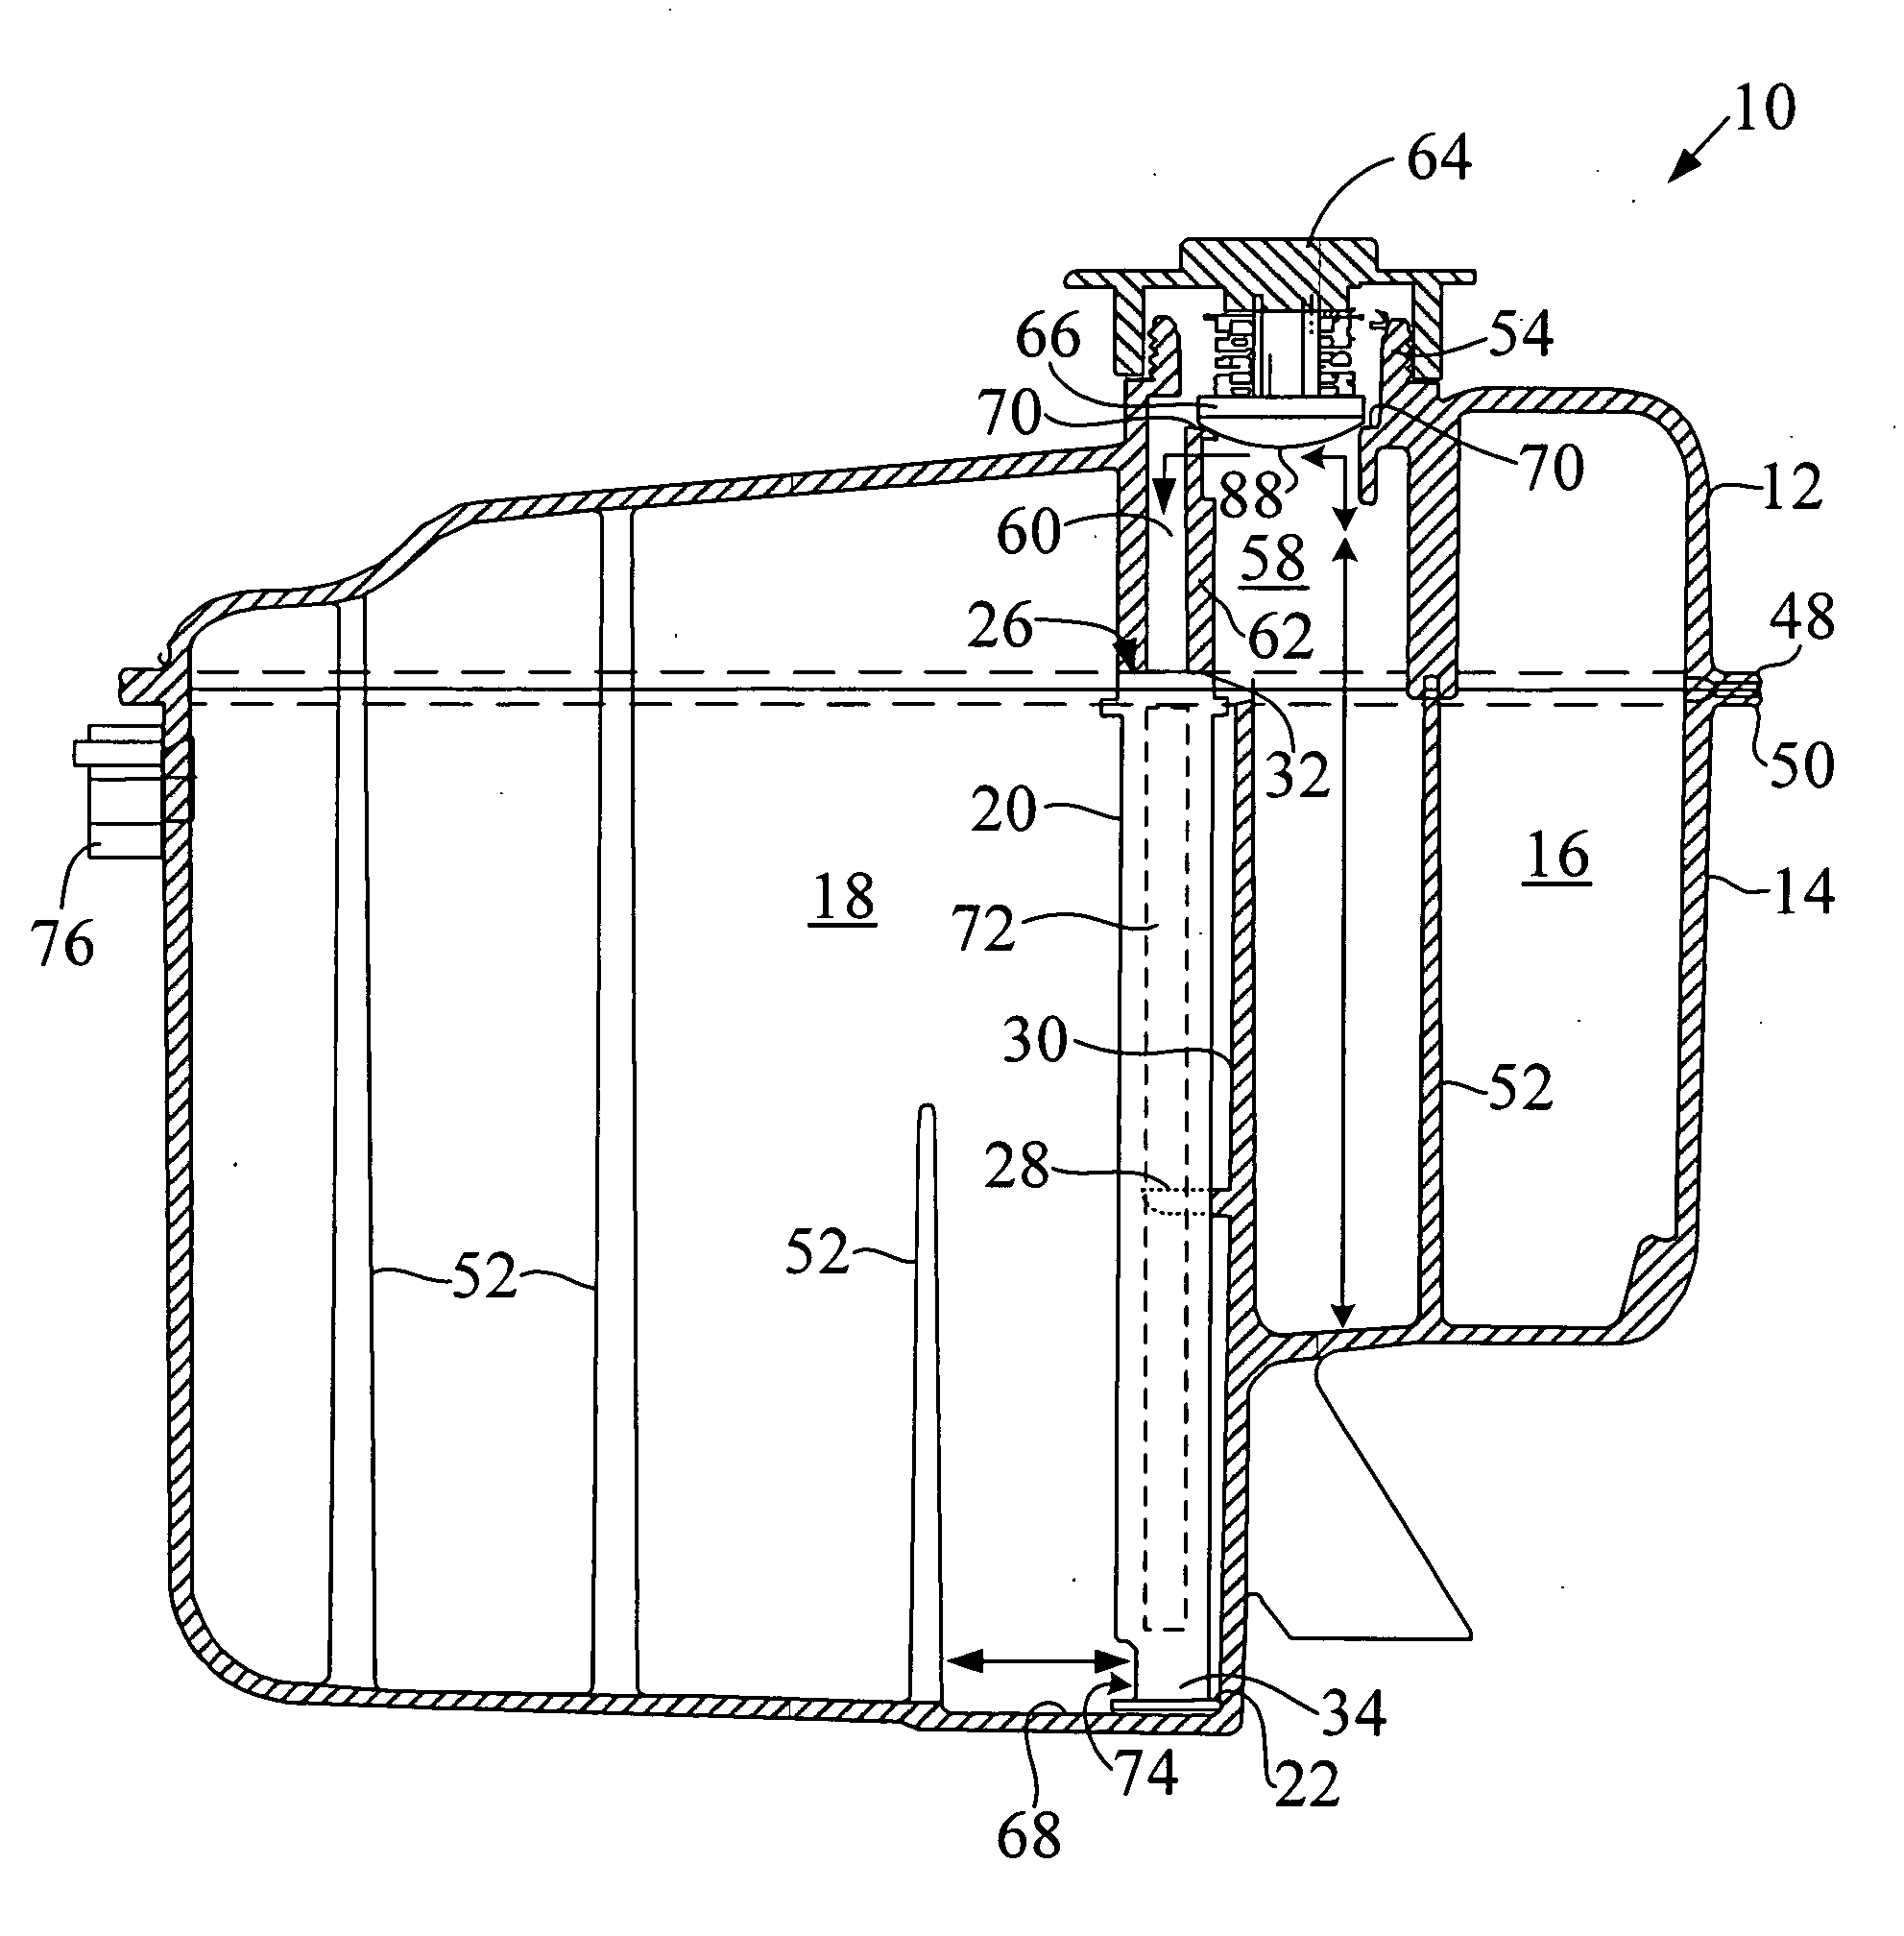 Siphon tube for a multi-chamber fluid reservoir